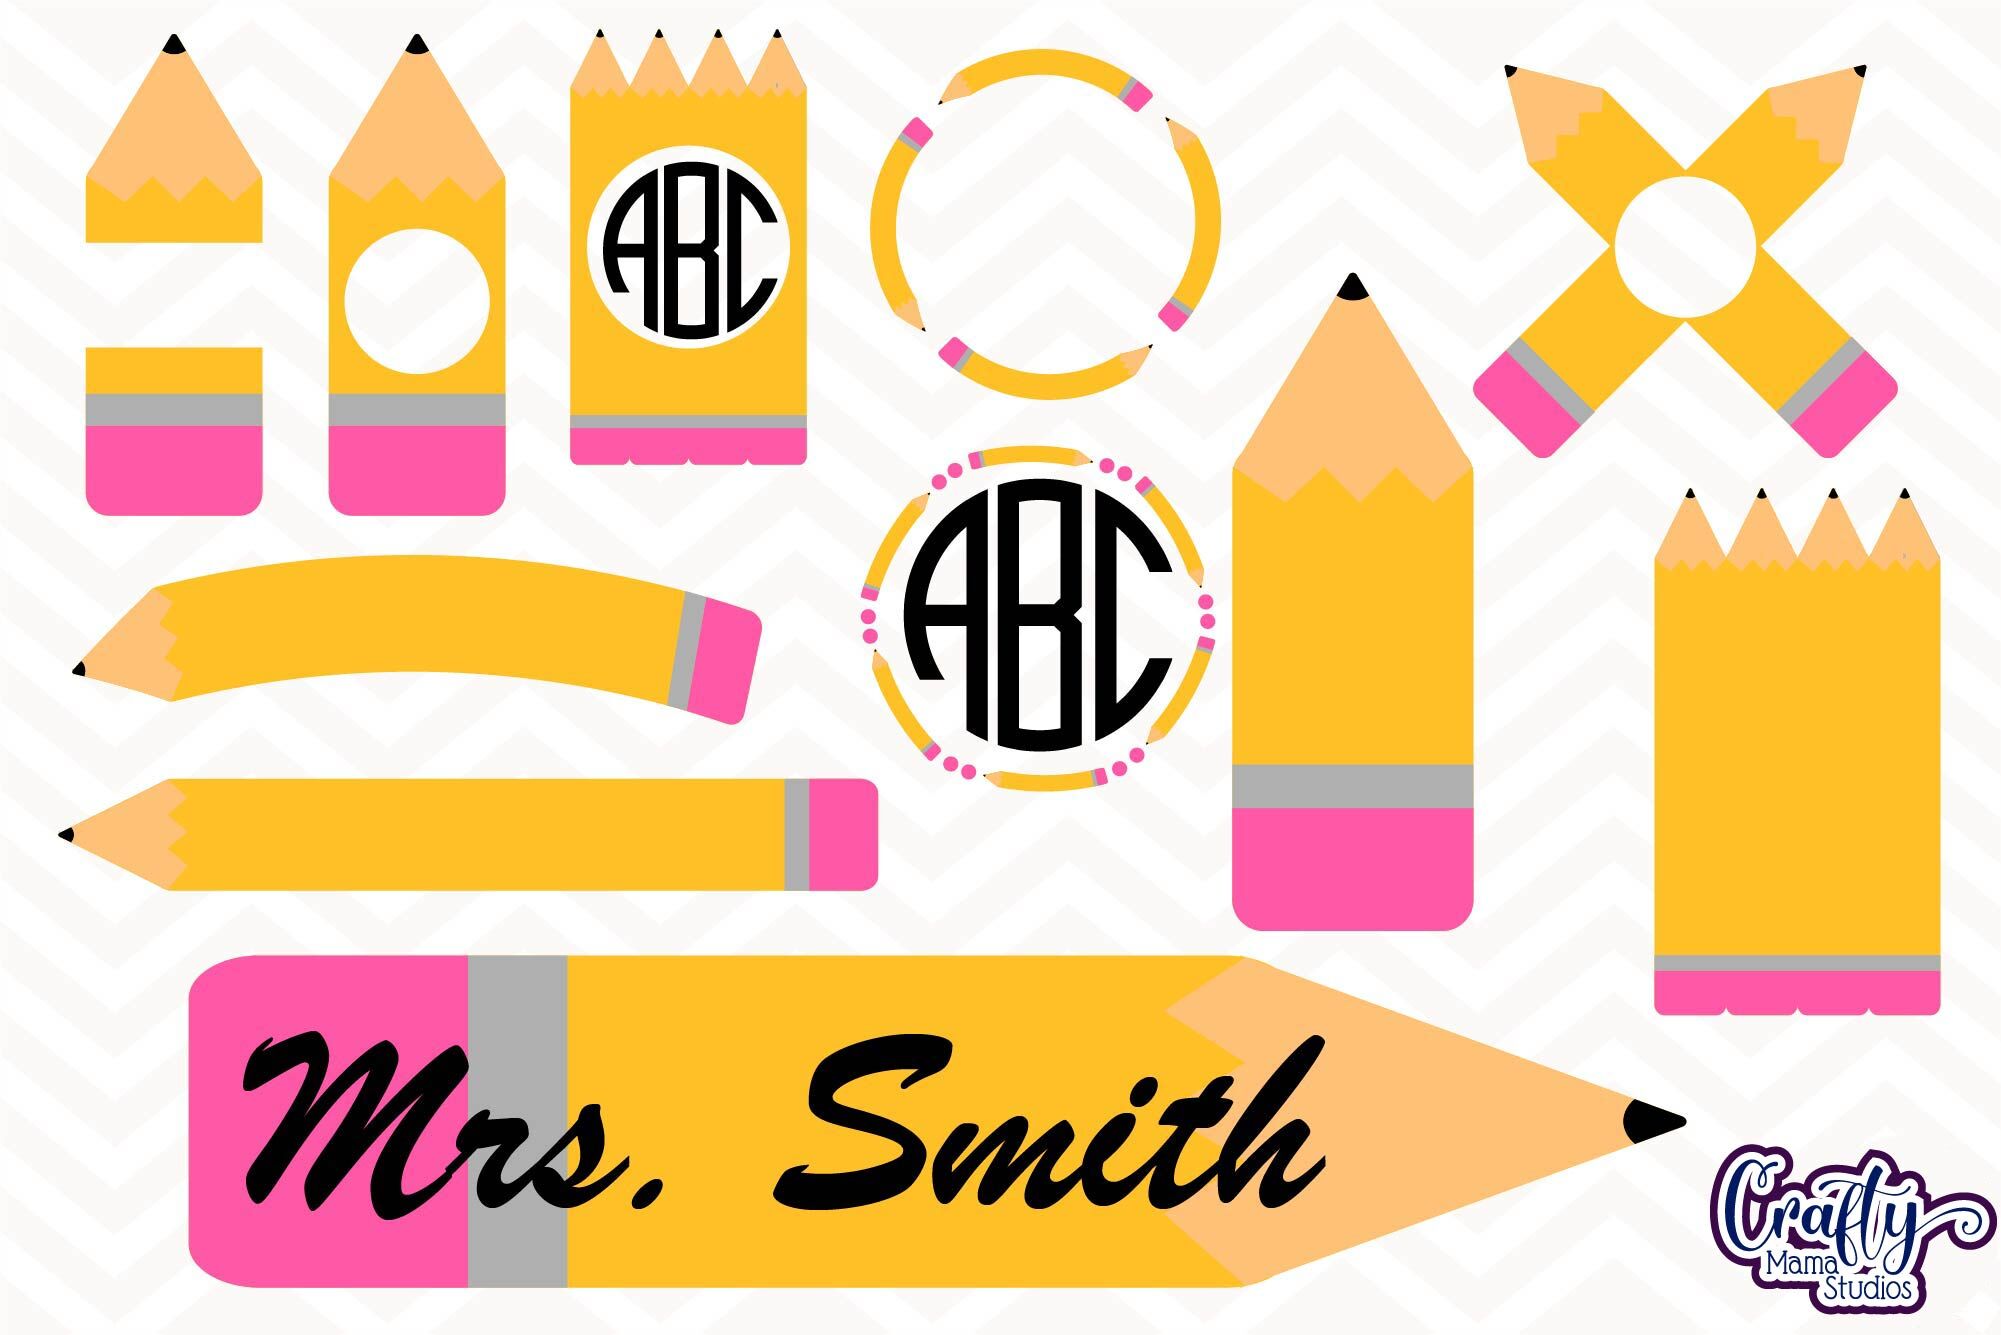 Download Pencil Svg Pencil Monogram Svg Back To School Teacher By Crafty Mama Studios Thehungryjpeg Com